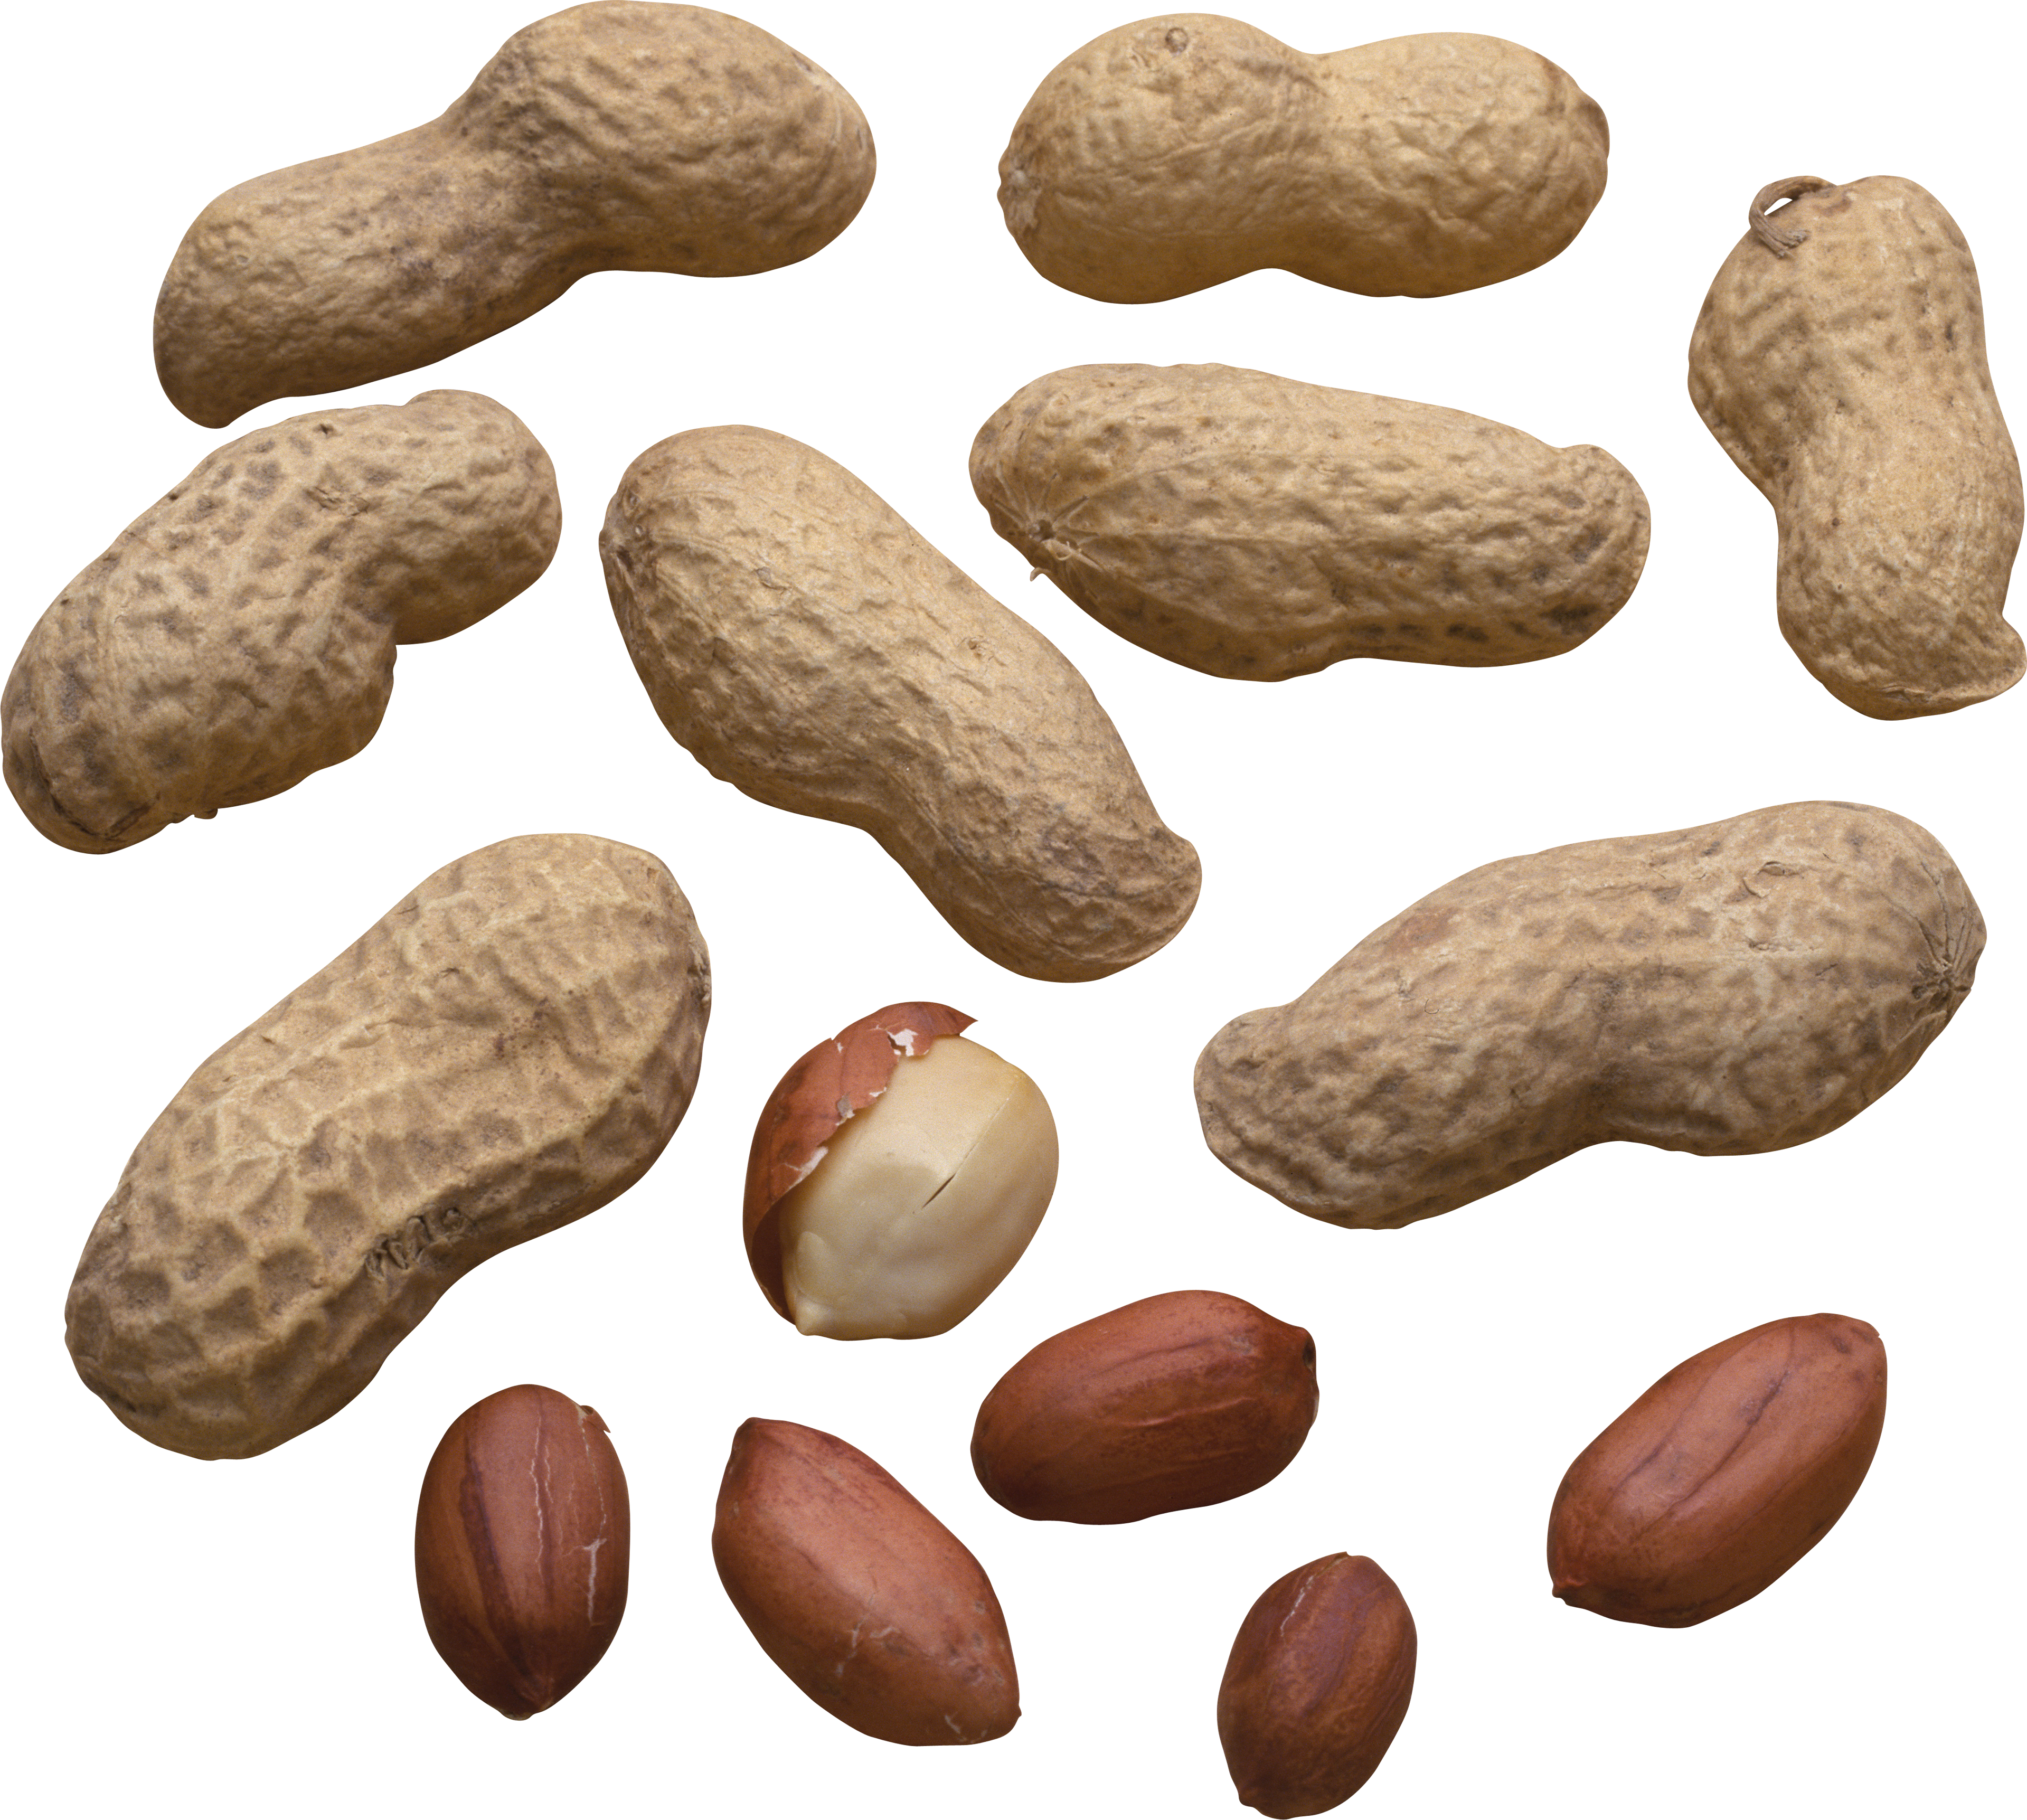 grain clipart nuts